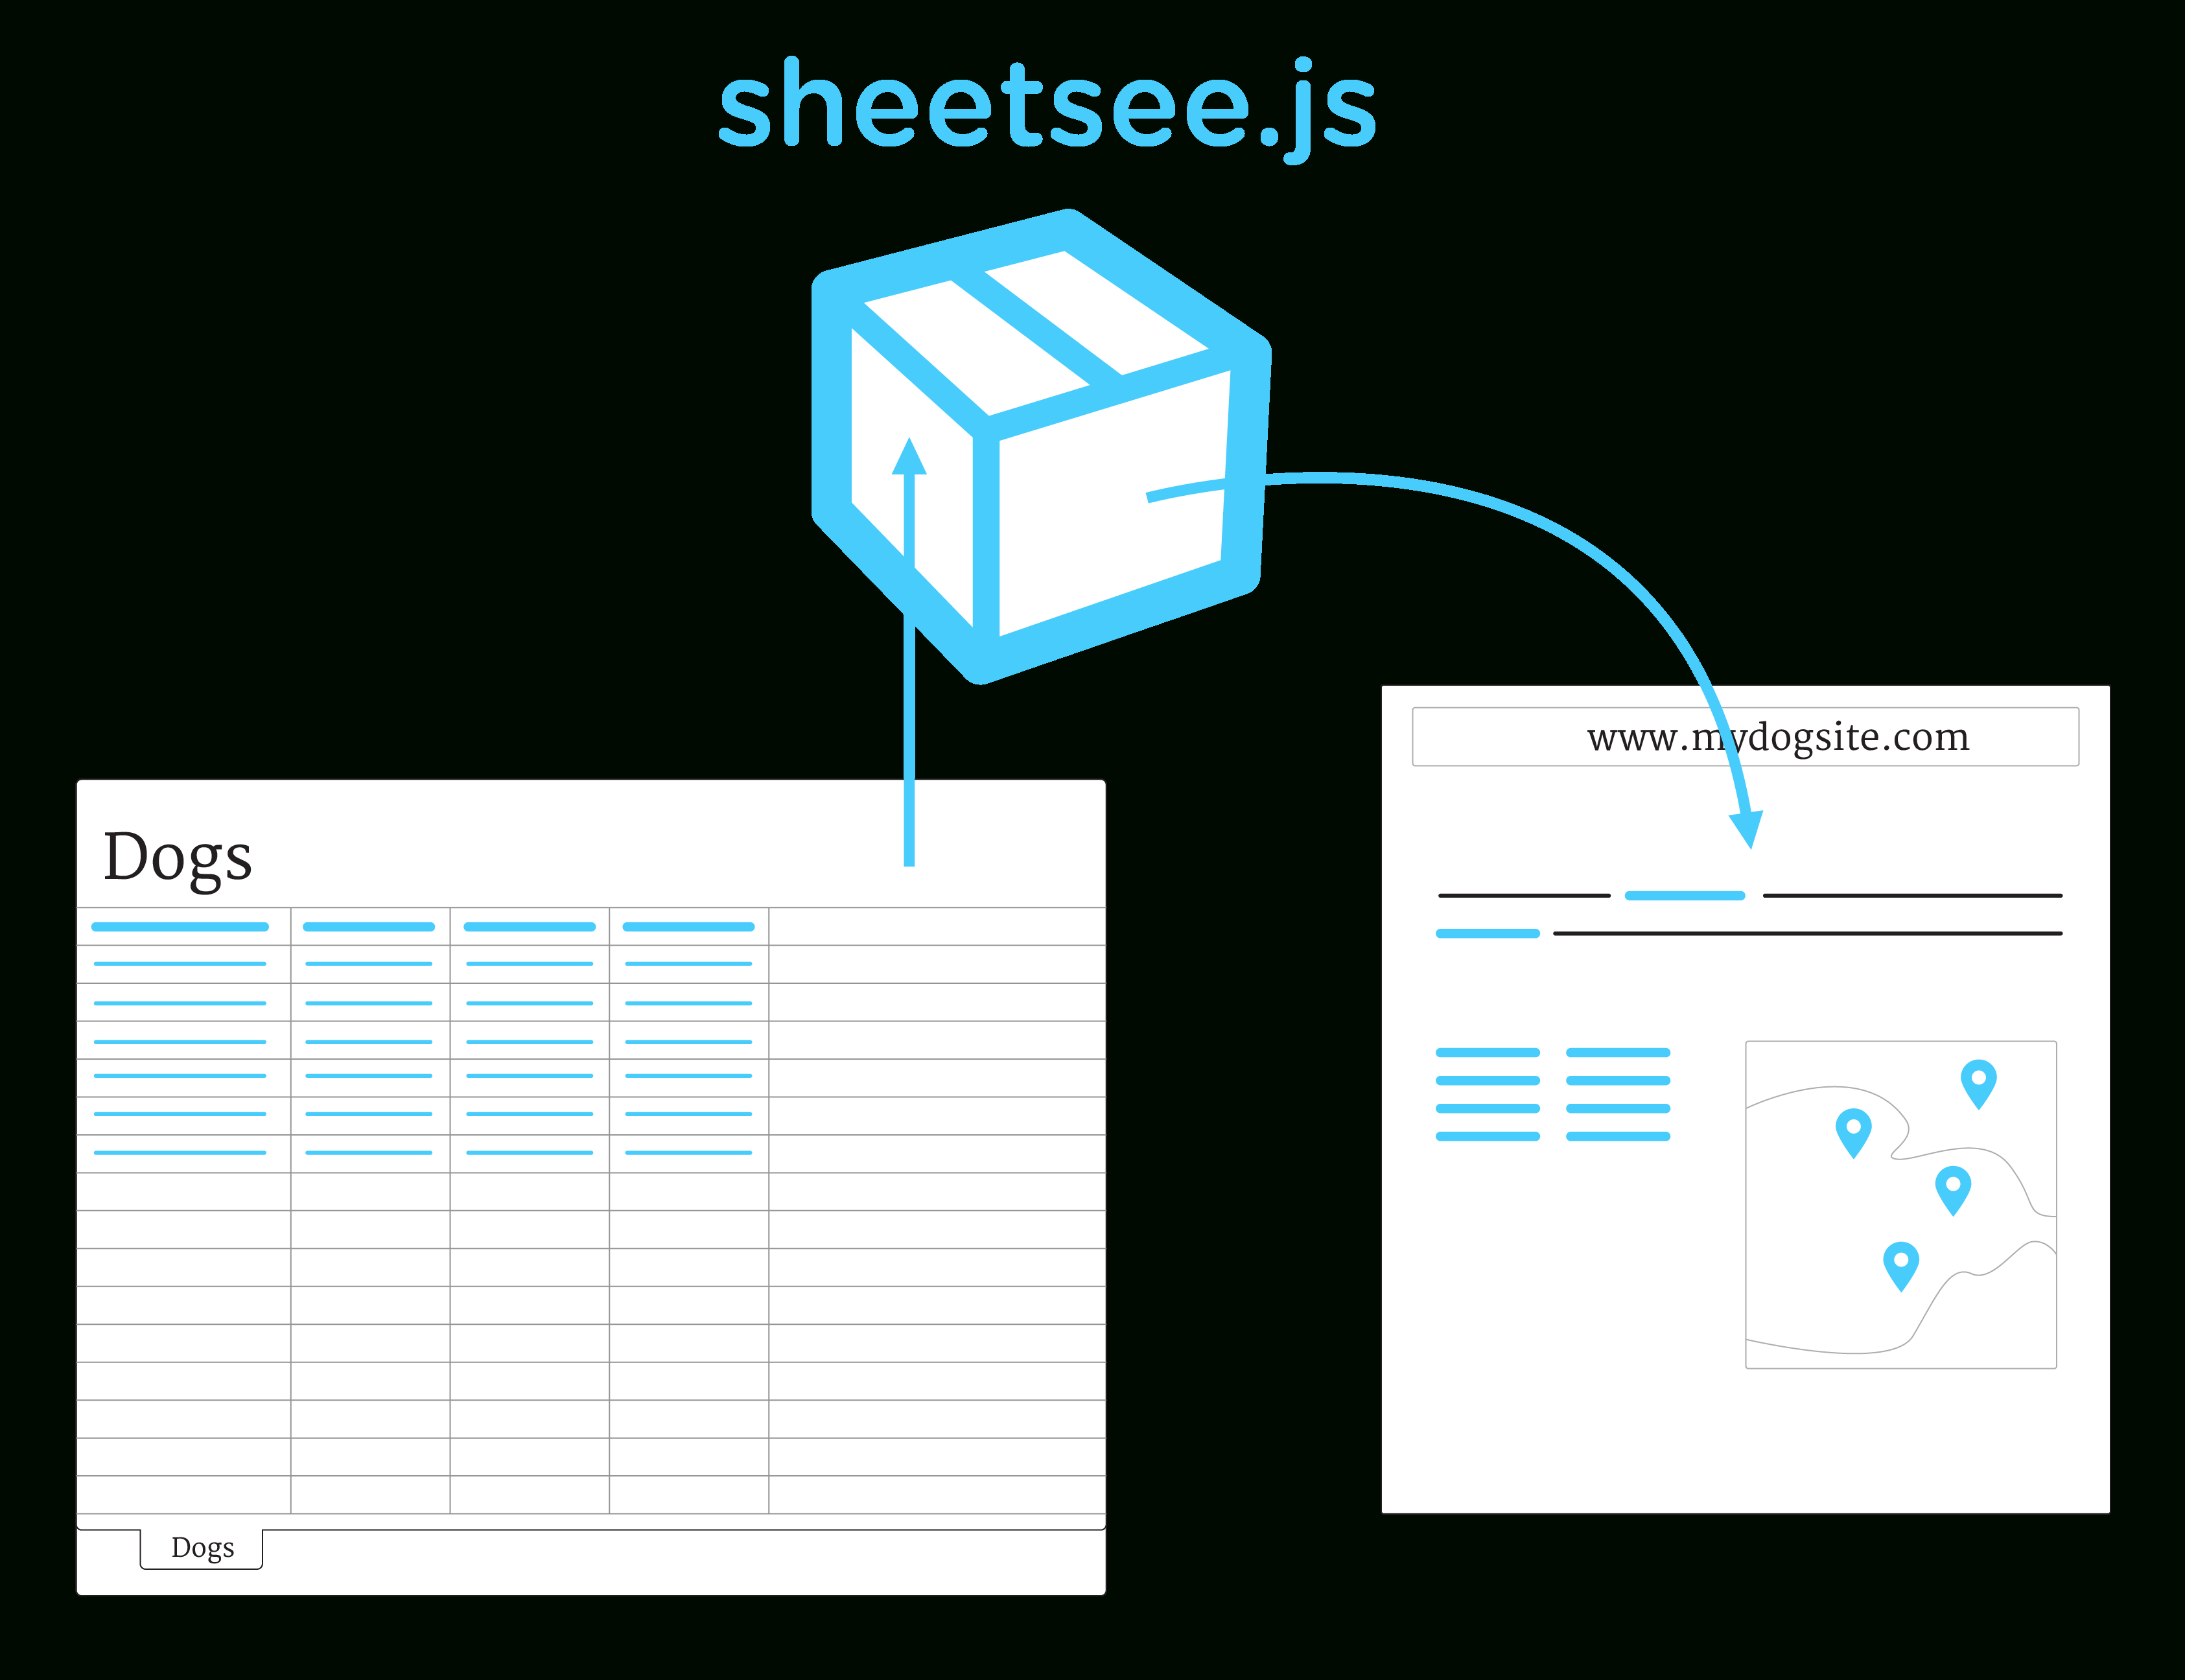 Javascript Spreadsheet Api In Sheetsee.js